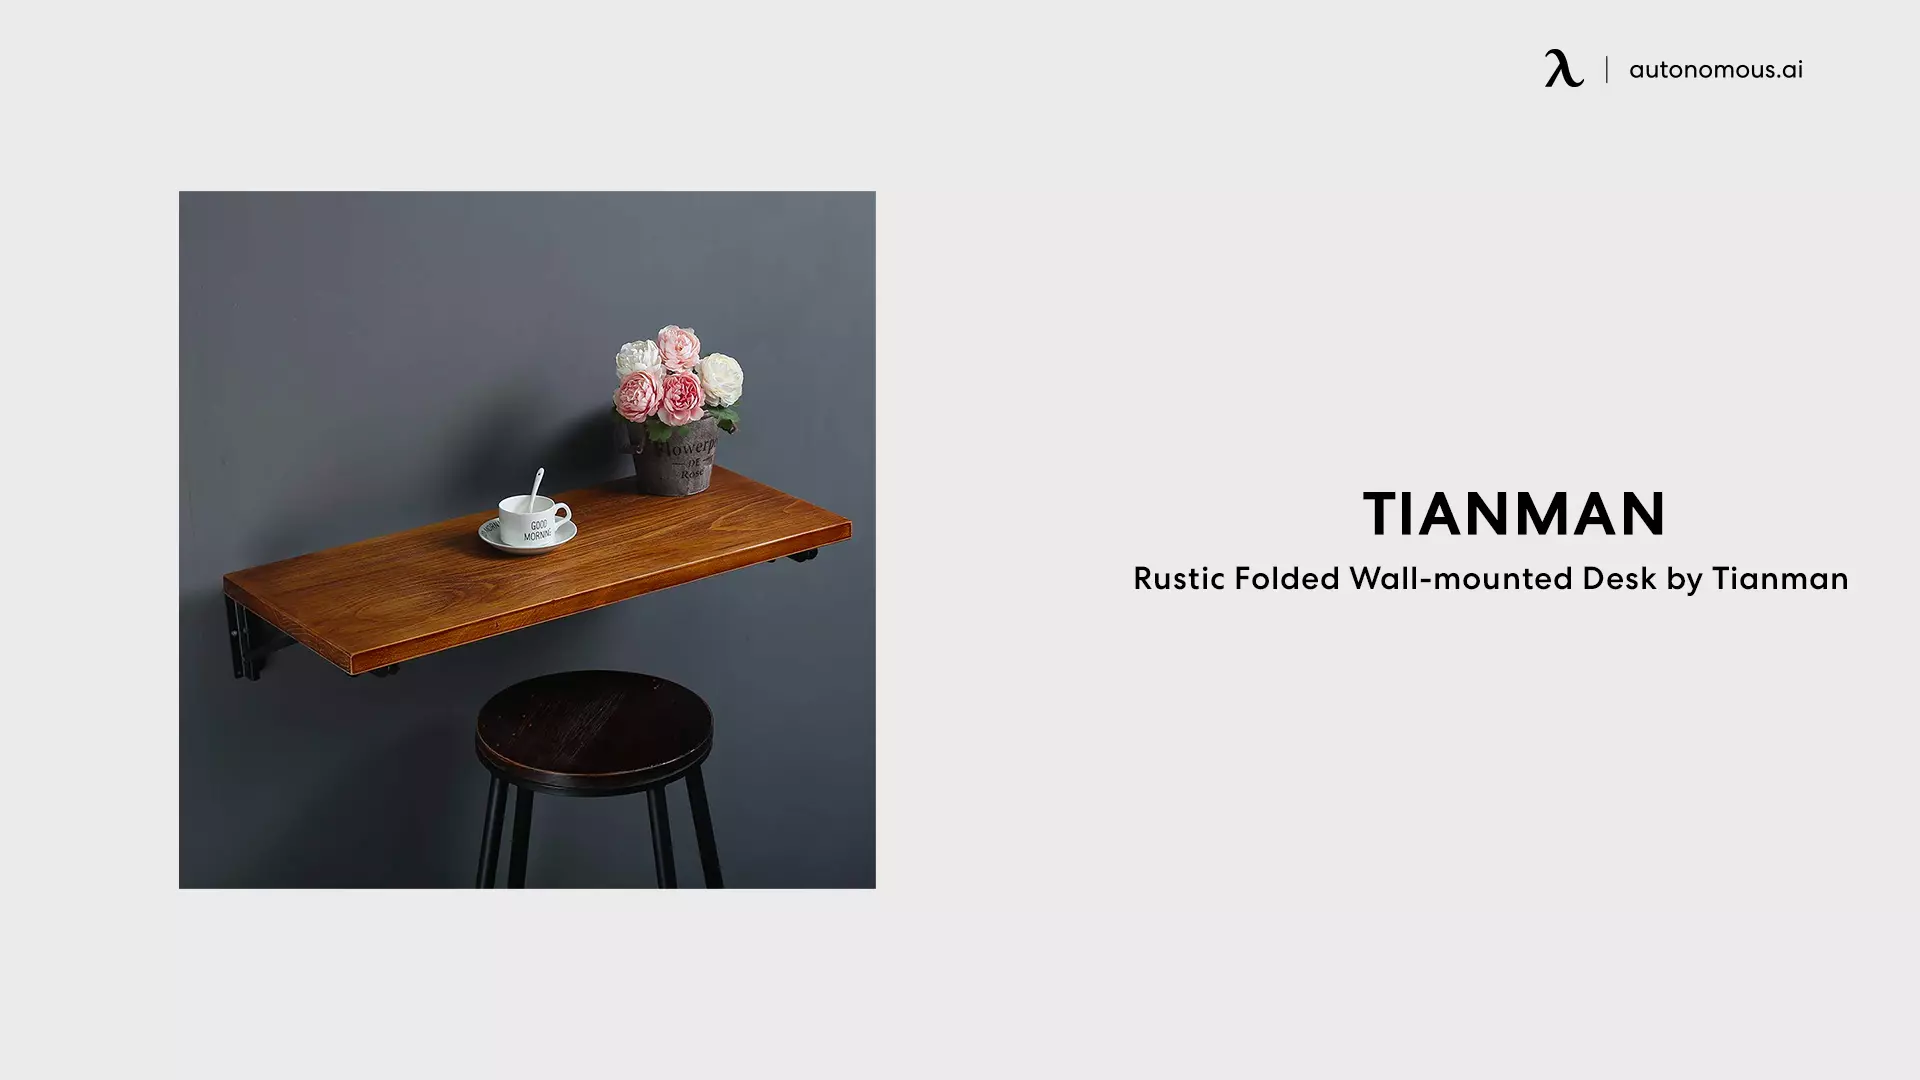 Tianman Rustic Folded Wall-mounted Desk